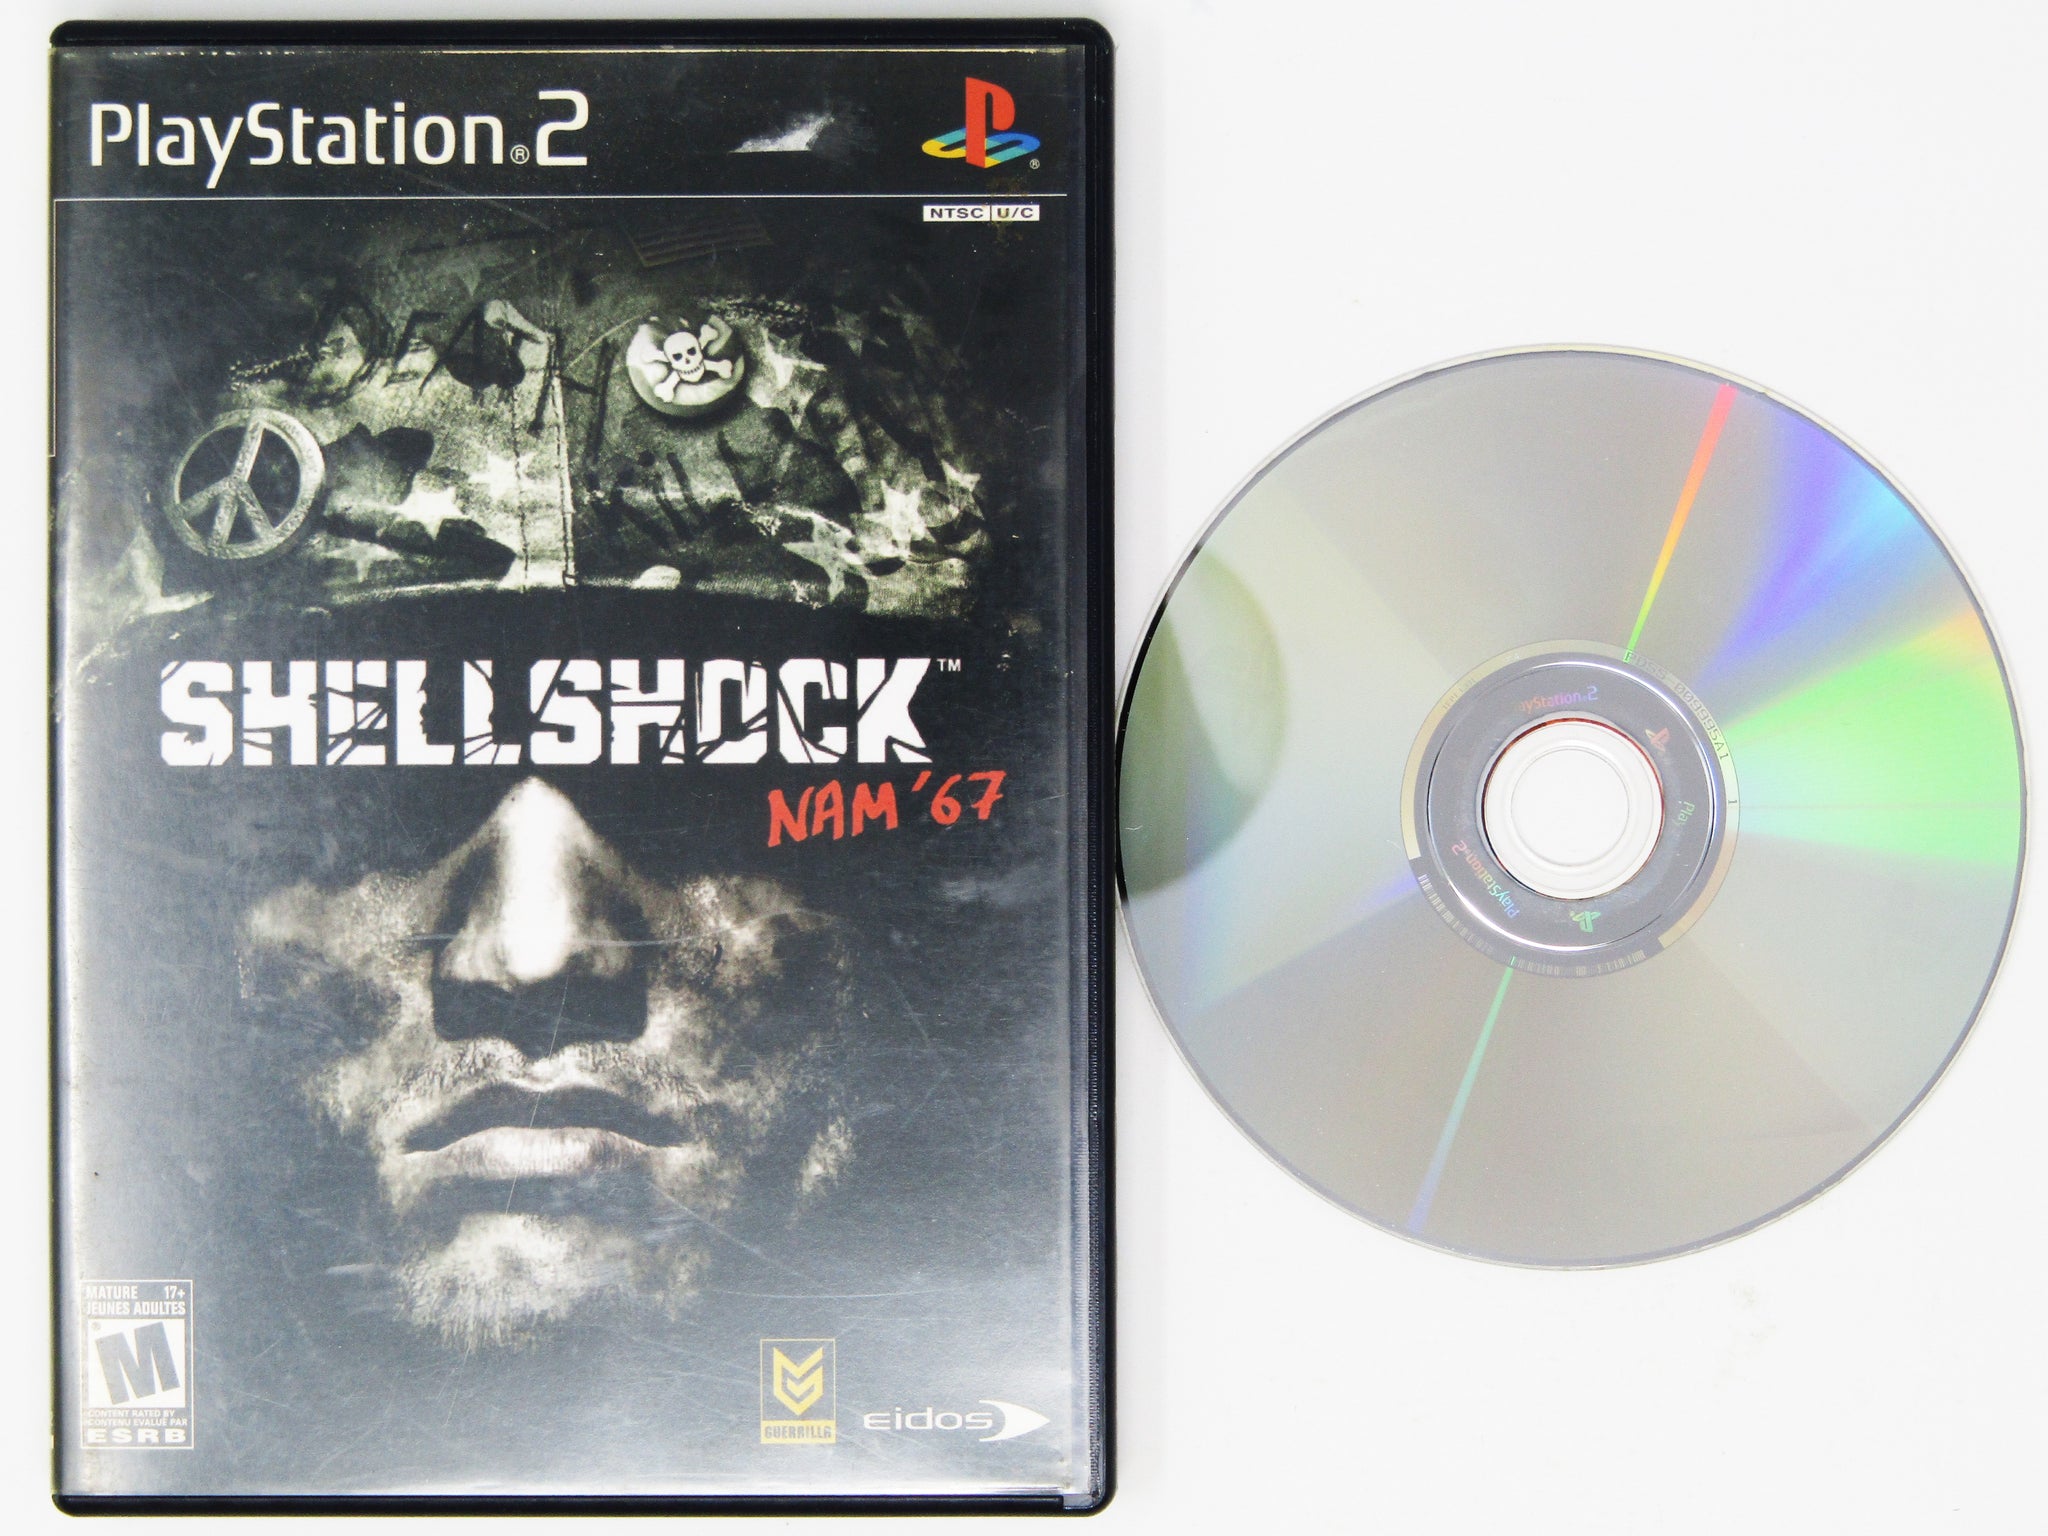 ShellShock - Nam '67 [SLUS 20828] (Sony Playstation 2) - Box Scans  (1200DPI) : Eidos : Free Download, Borrow, and Streaming : Internet Archive